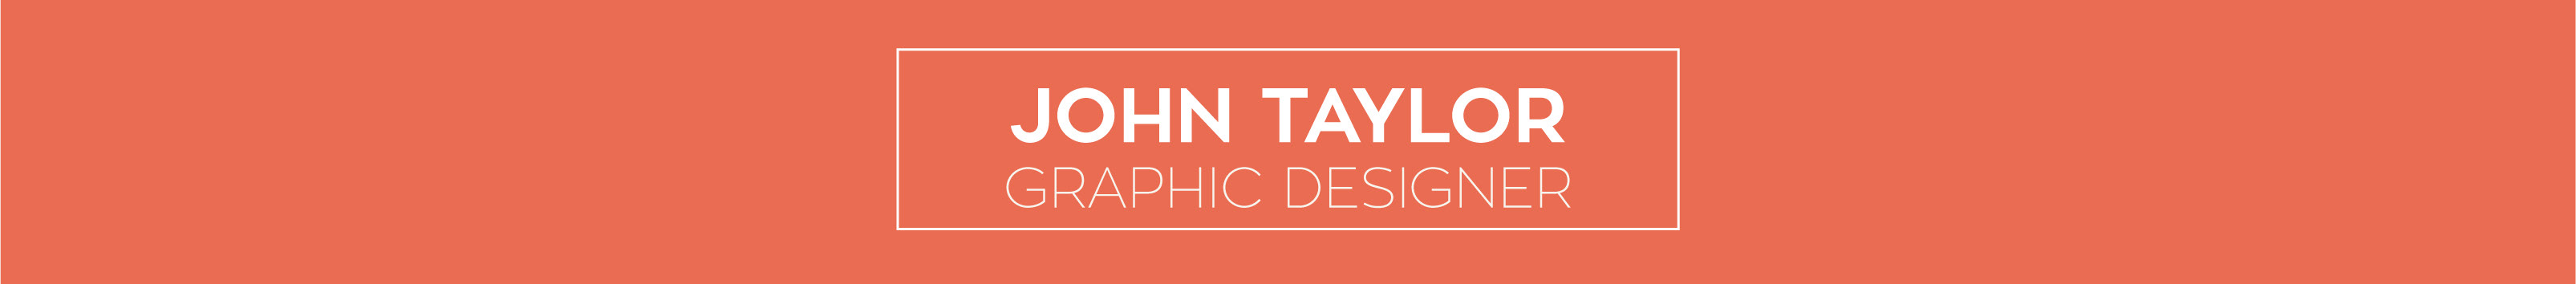 John Taylor's profile banner